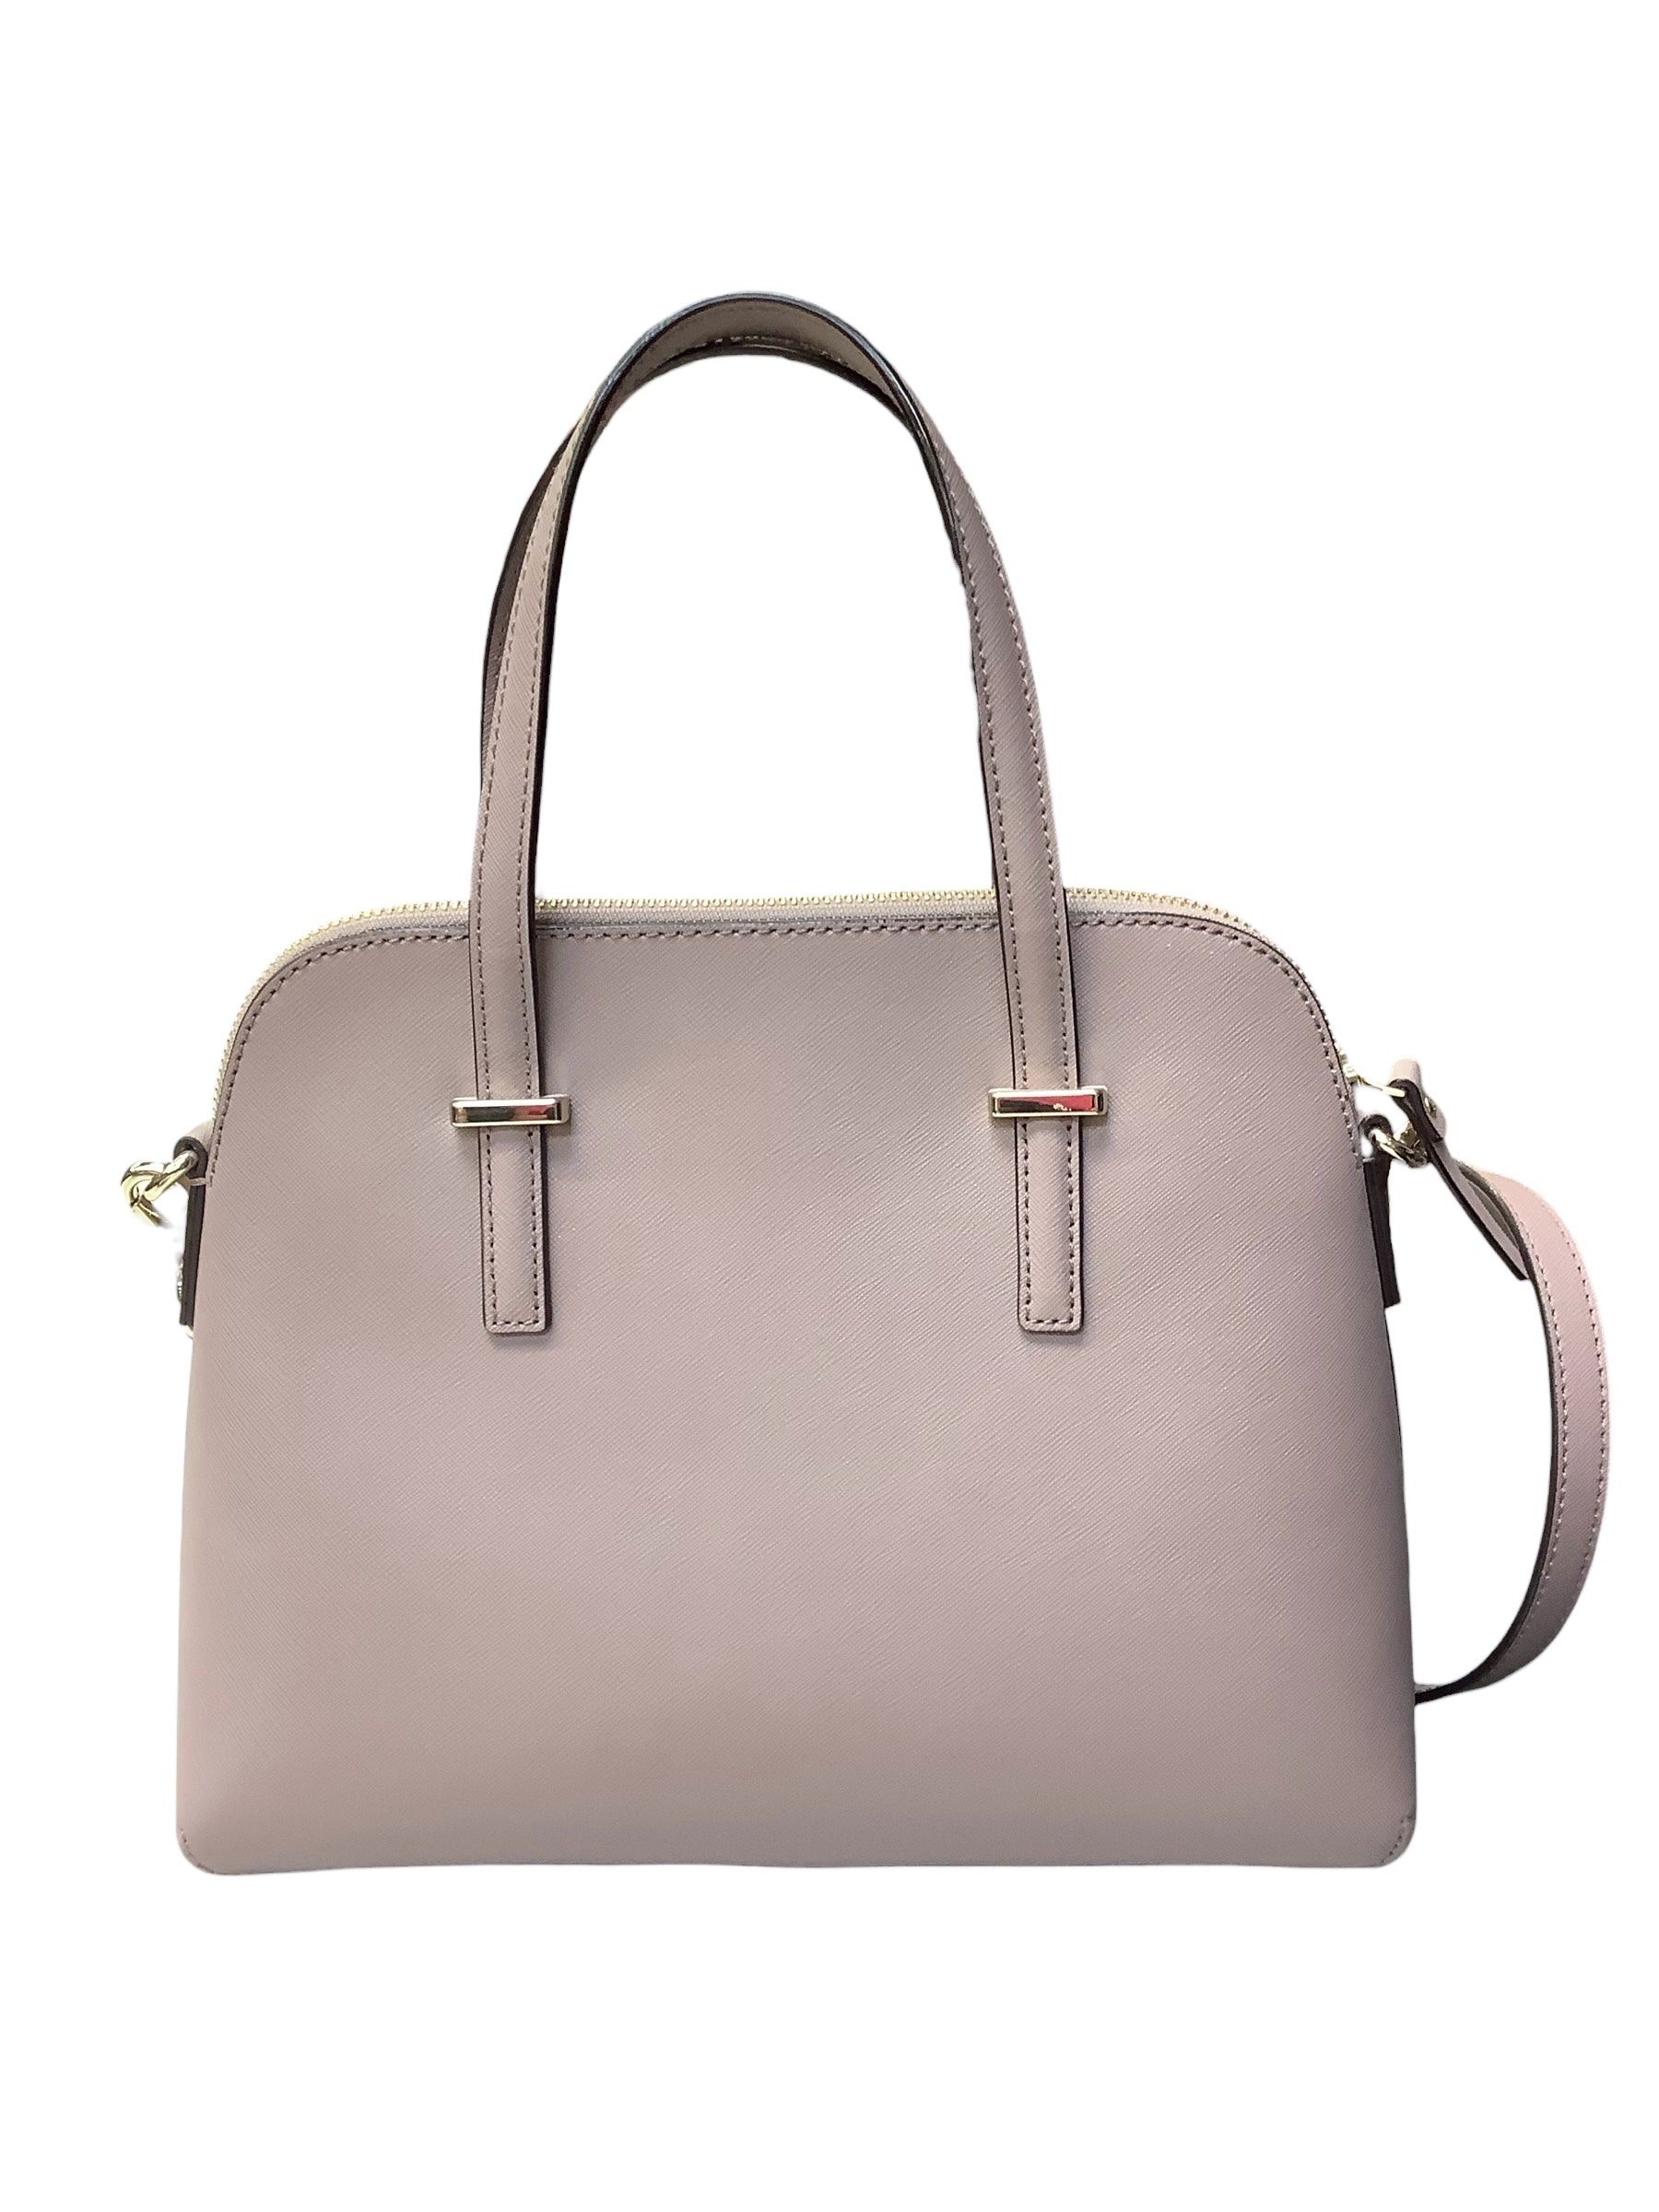 Lightweight Crossbody Bags for Women Shoulder Bag Purse Vegan Leather Soft  Travel Handbag with Multi Pockets - Walmart.com